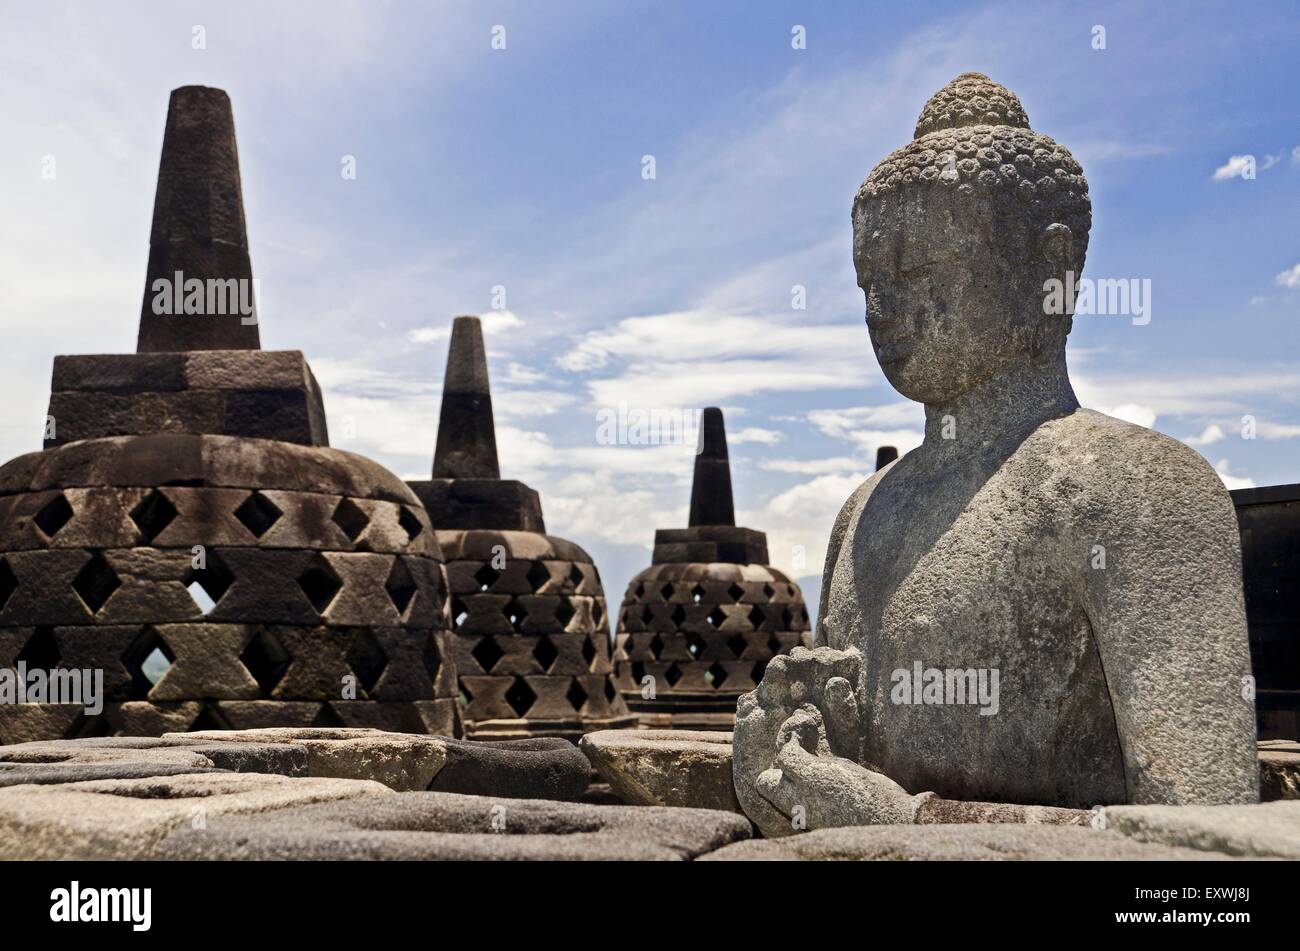 Estatua de Buda en el templo , Borobodur, Java, Indonesia, Asia Foto de stock